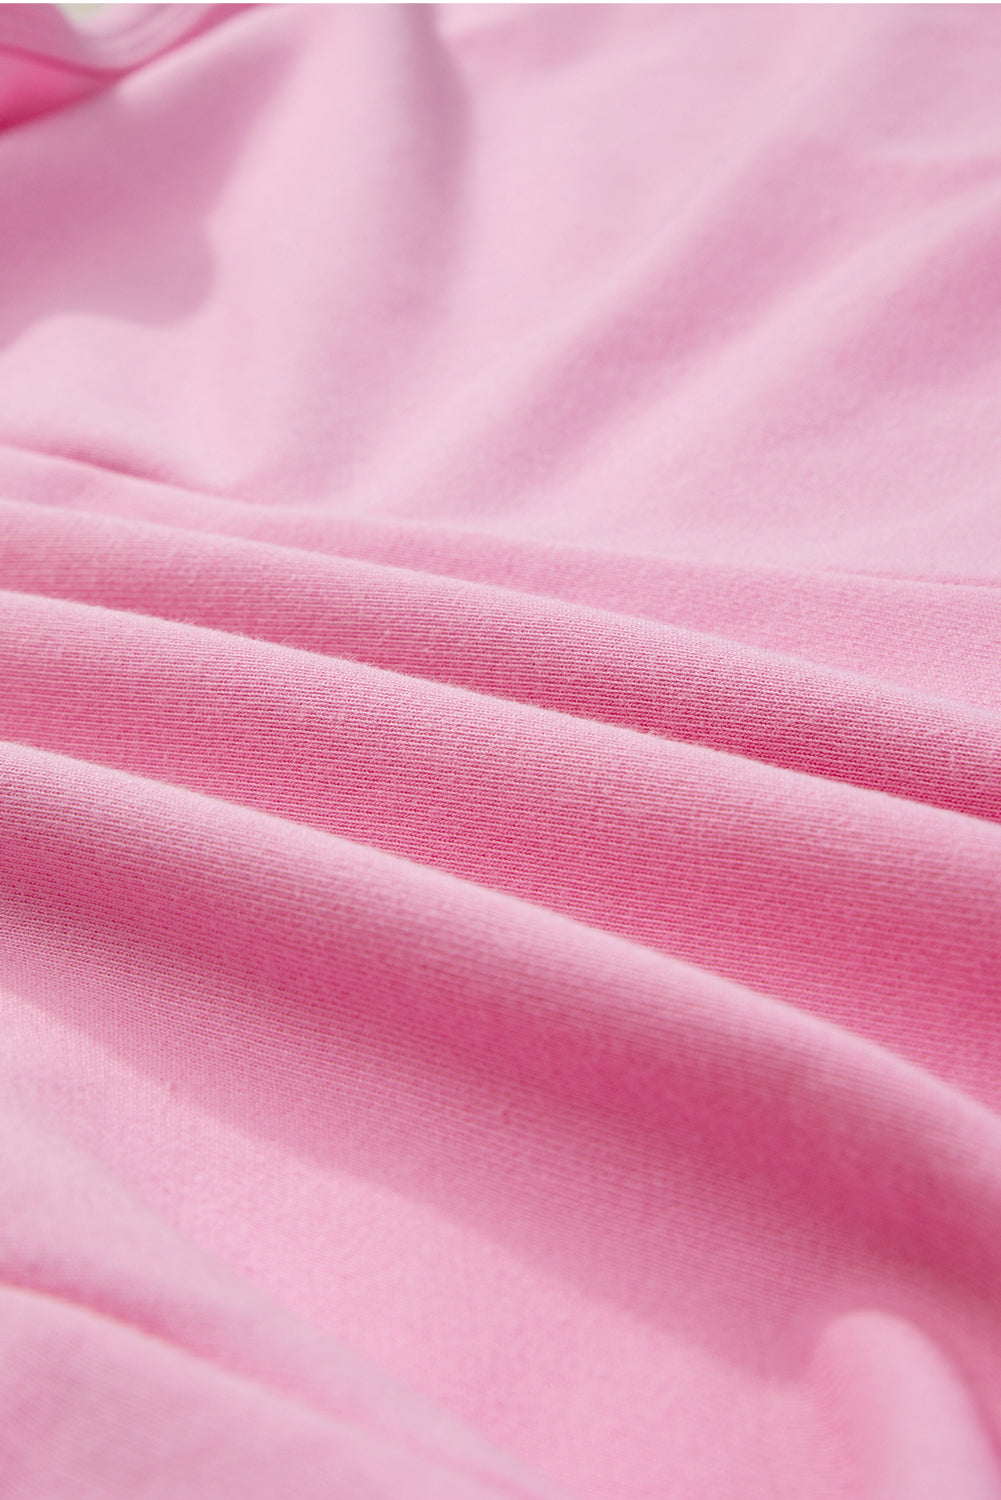 Pink Sleeveless Pocketed V Neck Jersey Romper